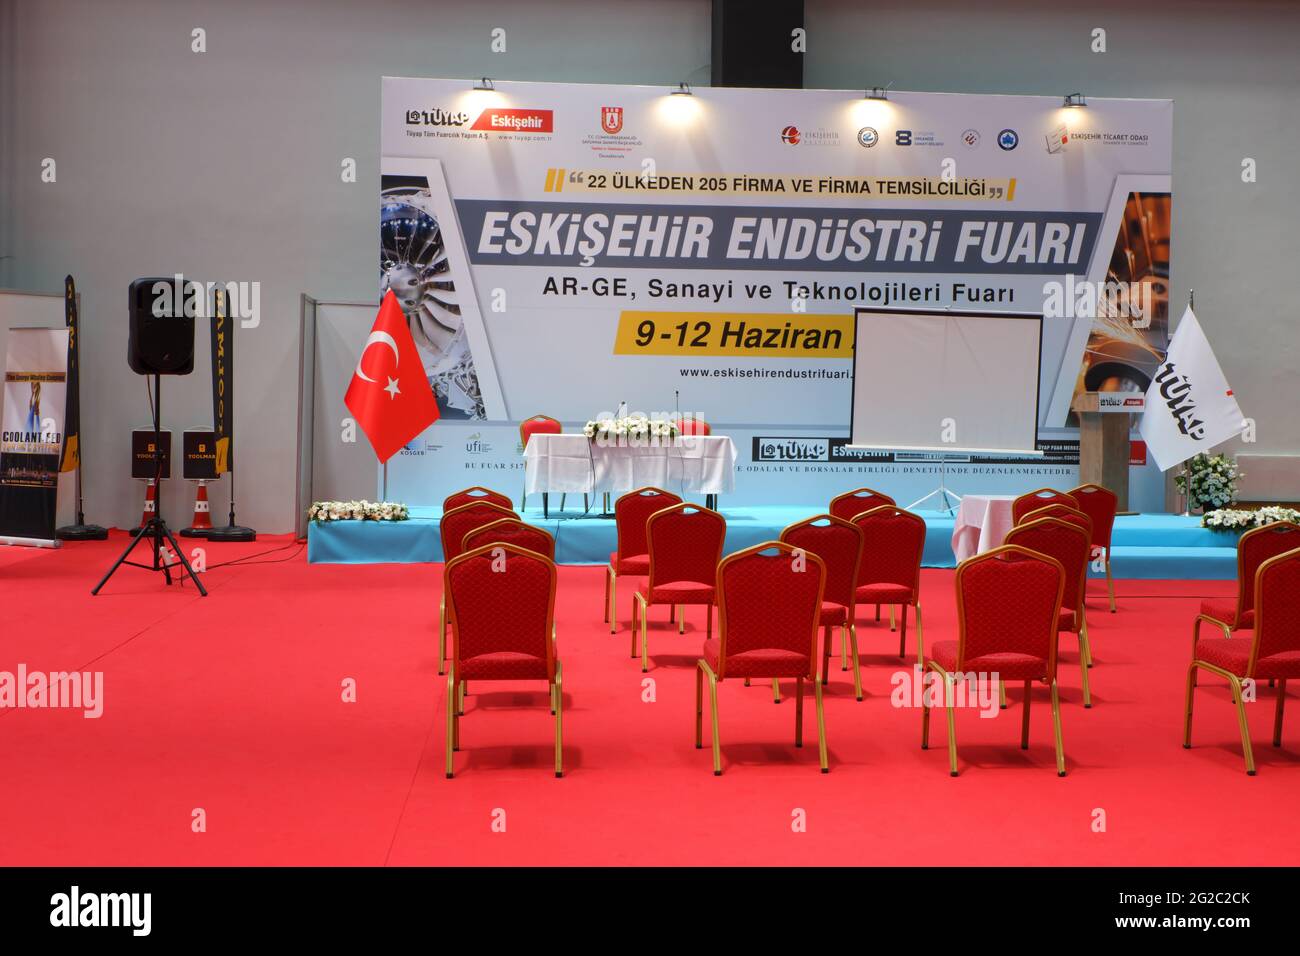 Eskisehir, Turkey. 10th June, 2021. Eskisehir Industry Fair - R & D, Industry and Technology Fair, Credit: Del Calle/Alamy Live News Stock Photo